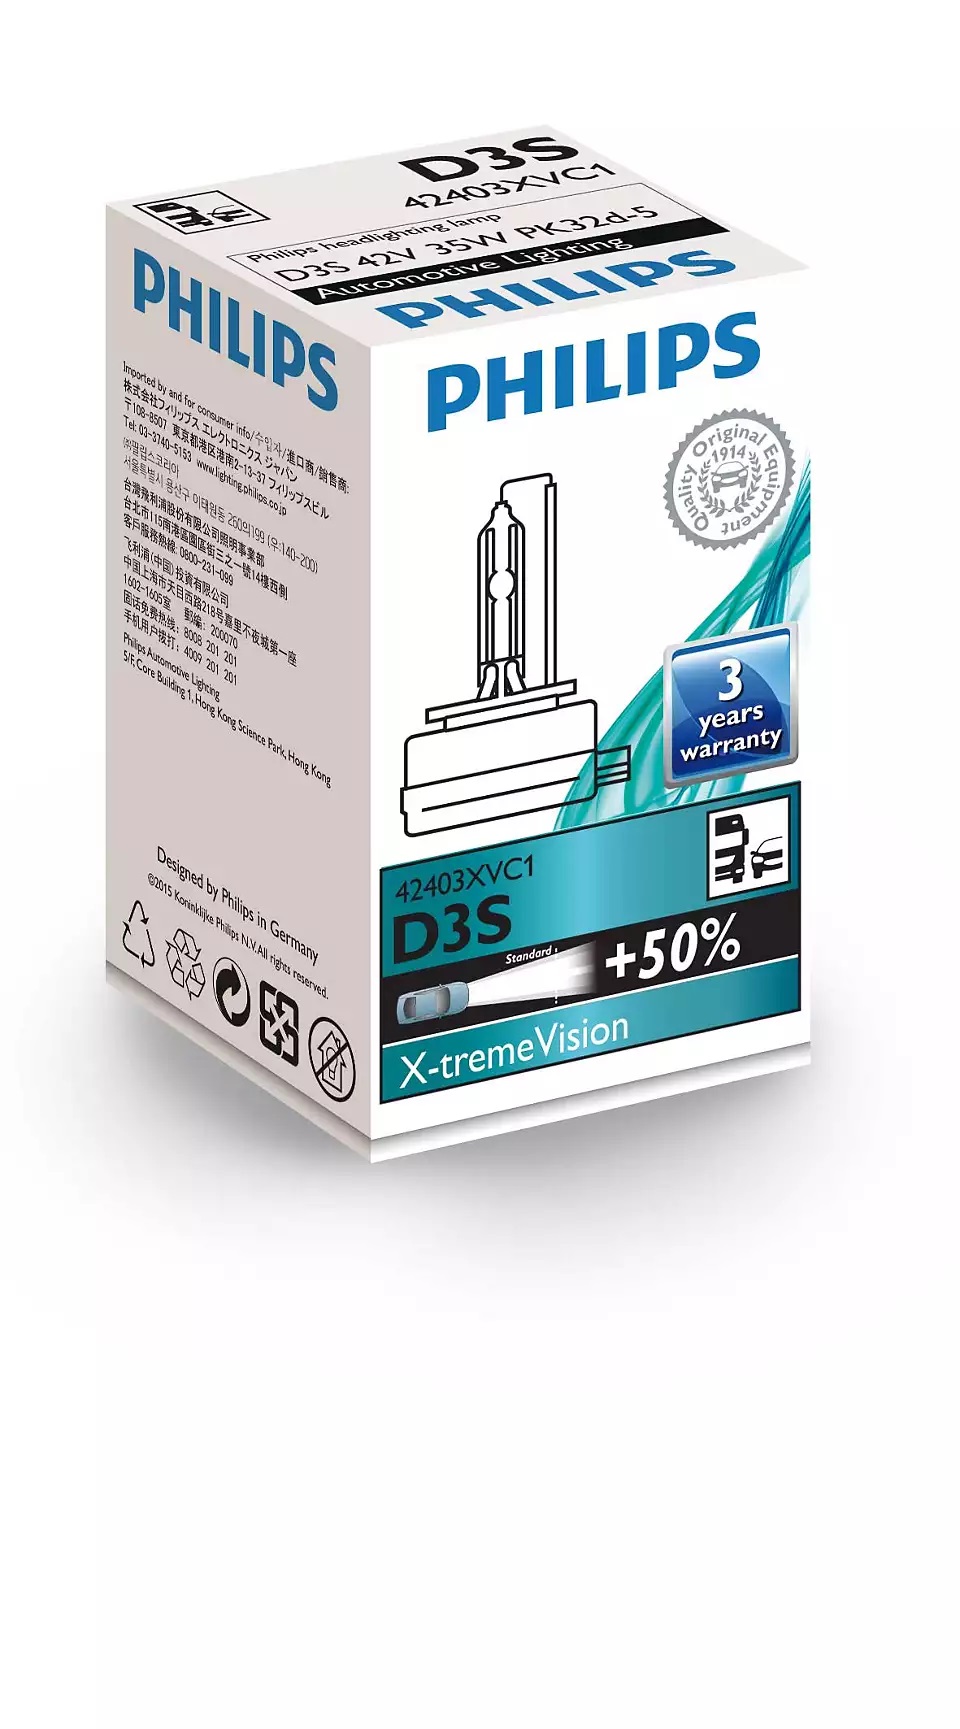 Ксеноновая лампа Philips D3S 35W +50% X-tremeVision 1шт 42403XVC1